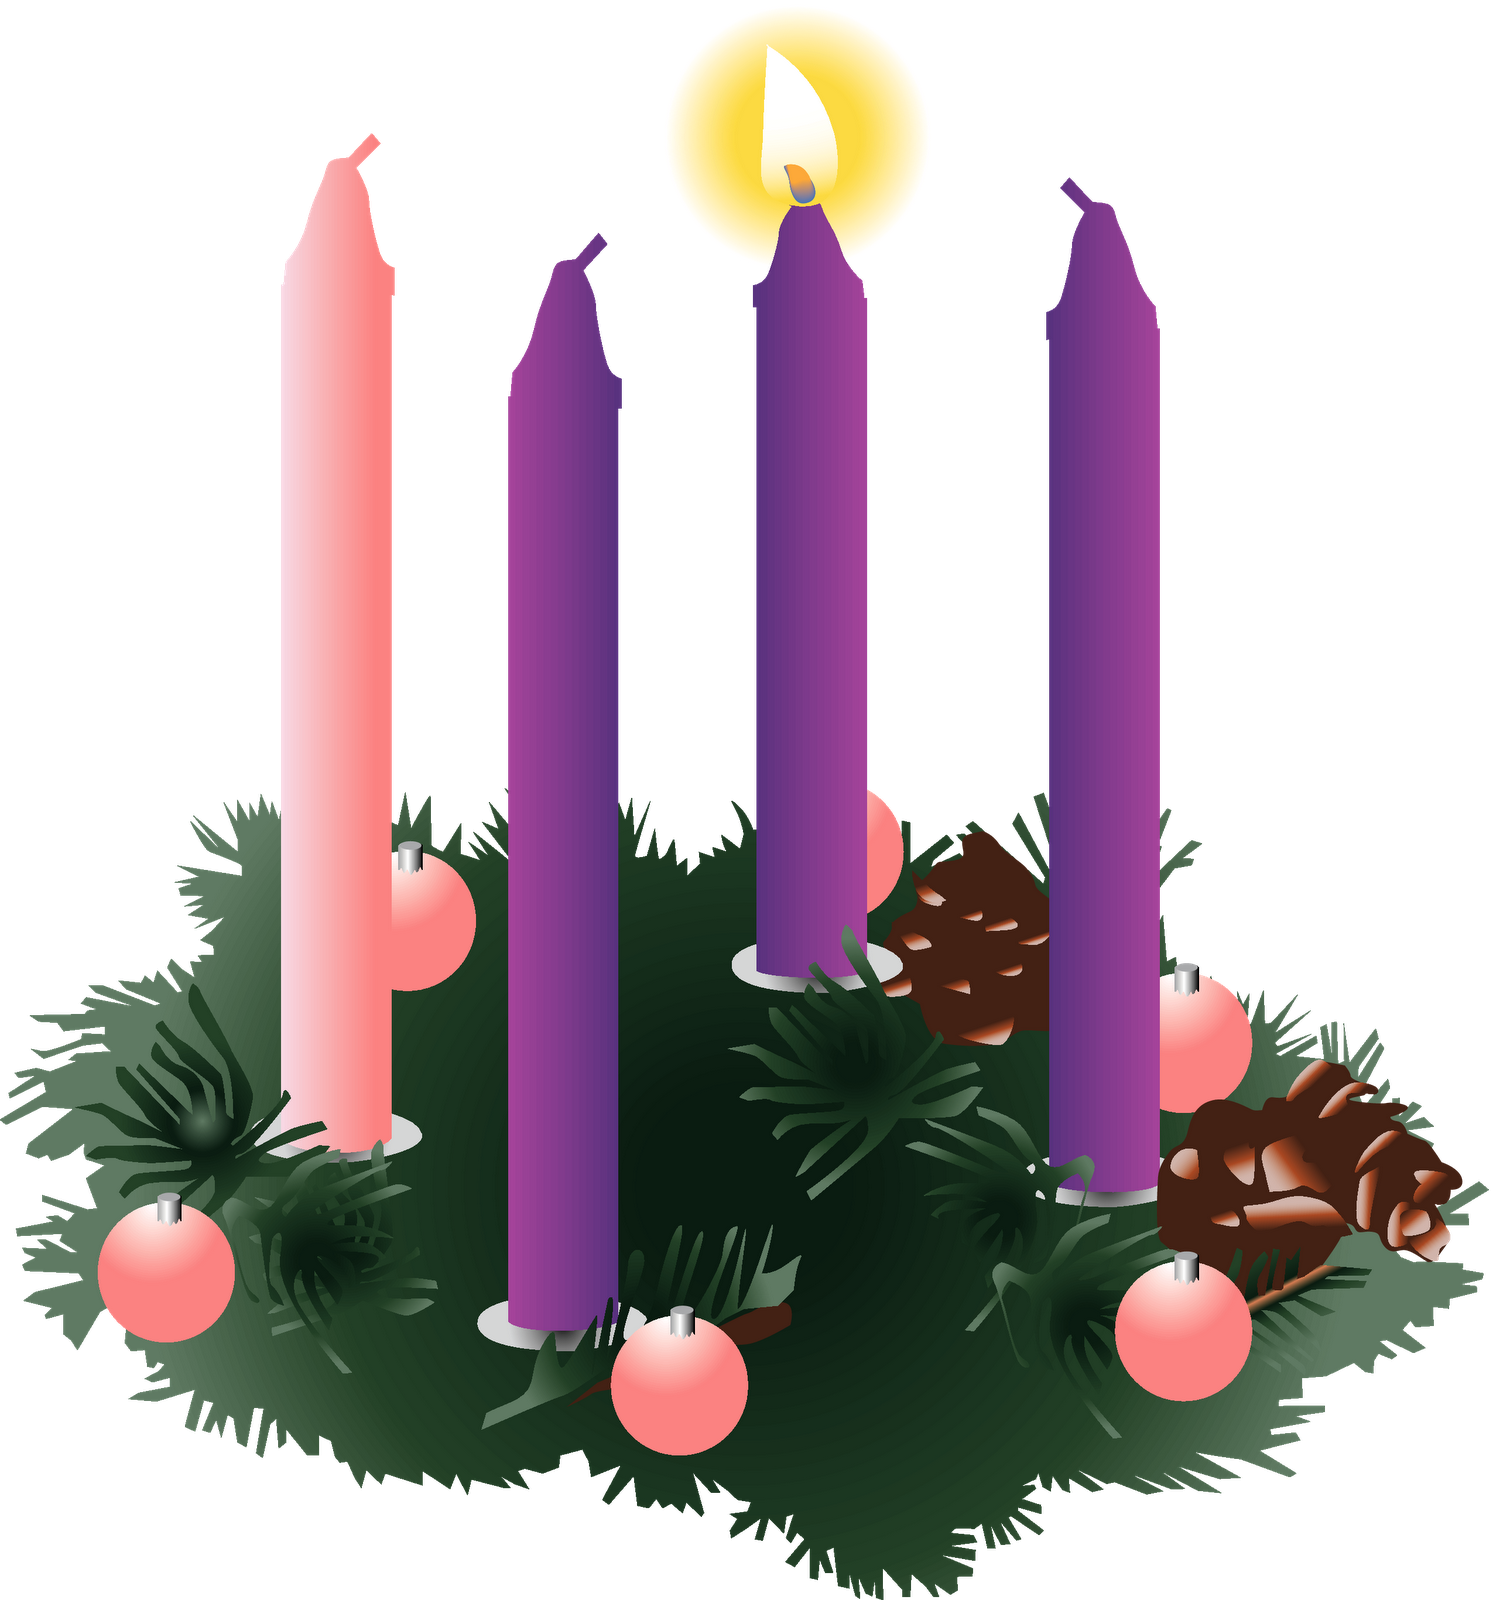 Candles Wreath Advent Sunday Mass Gaudete Church Clipart